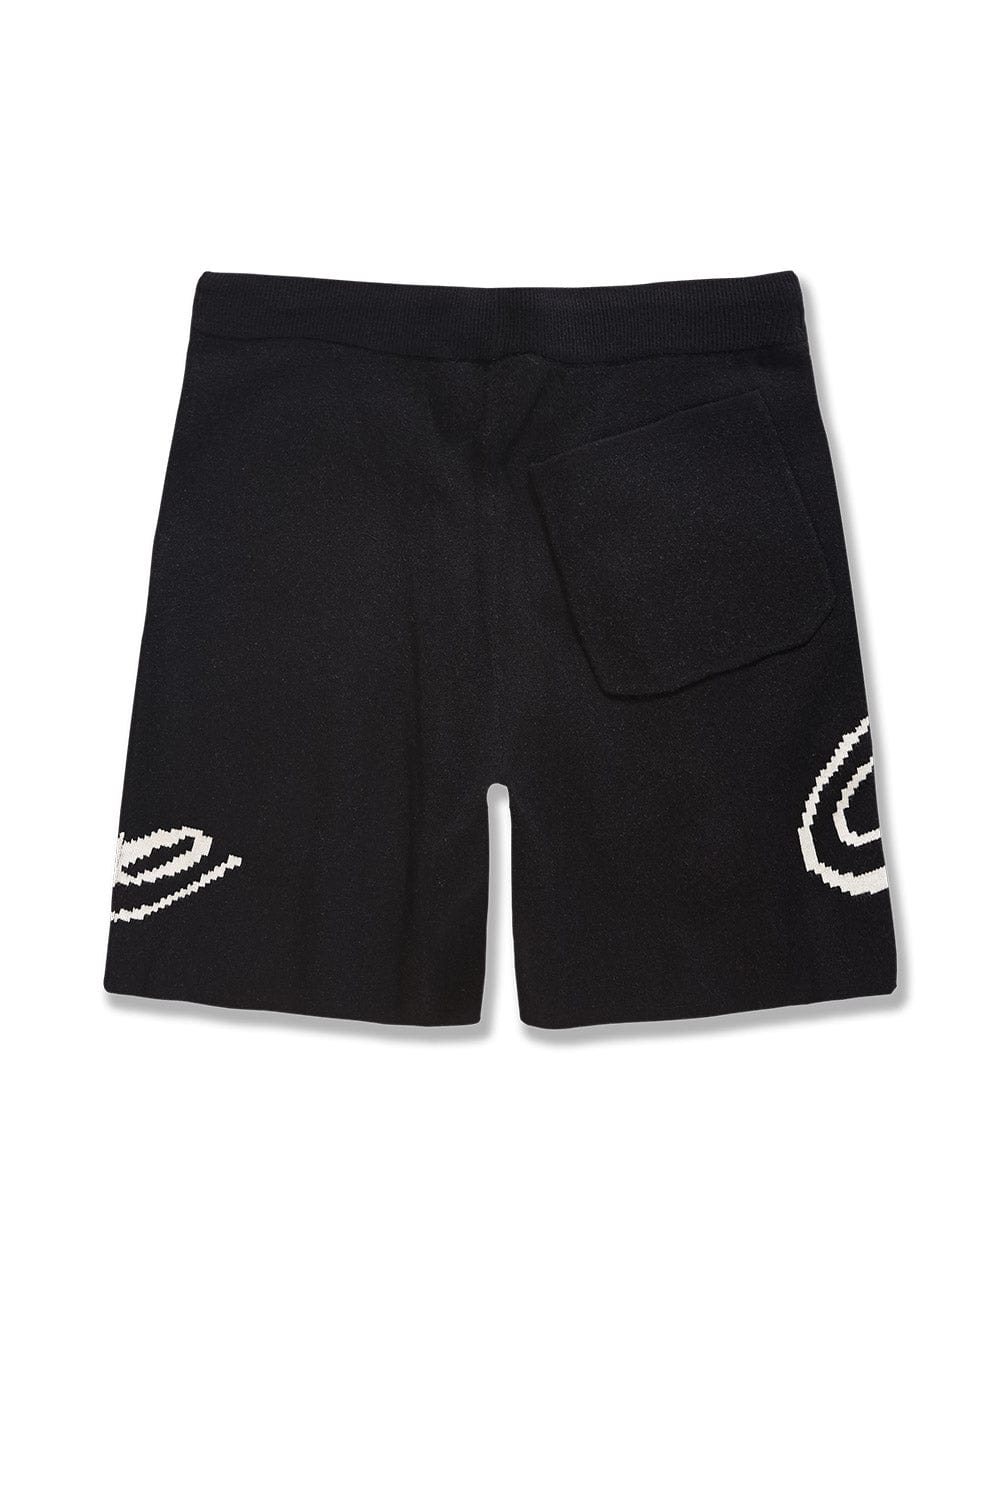 Jordan Craig Retro - Paradise Knit Shorts (Black)